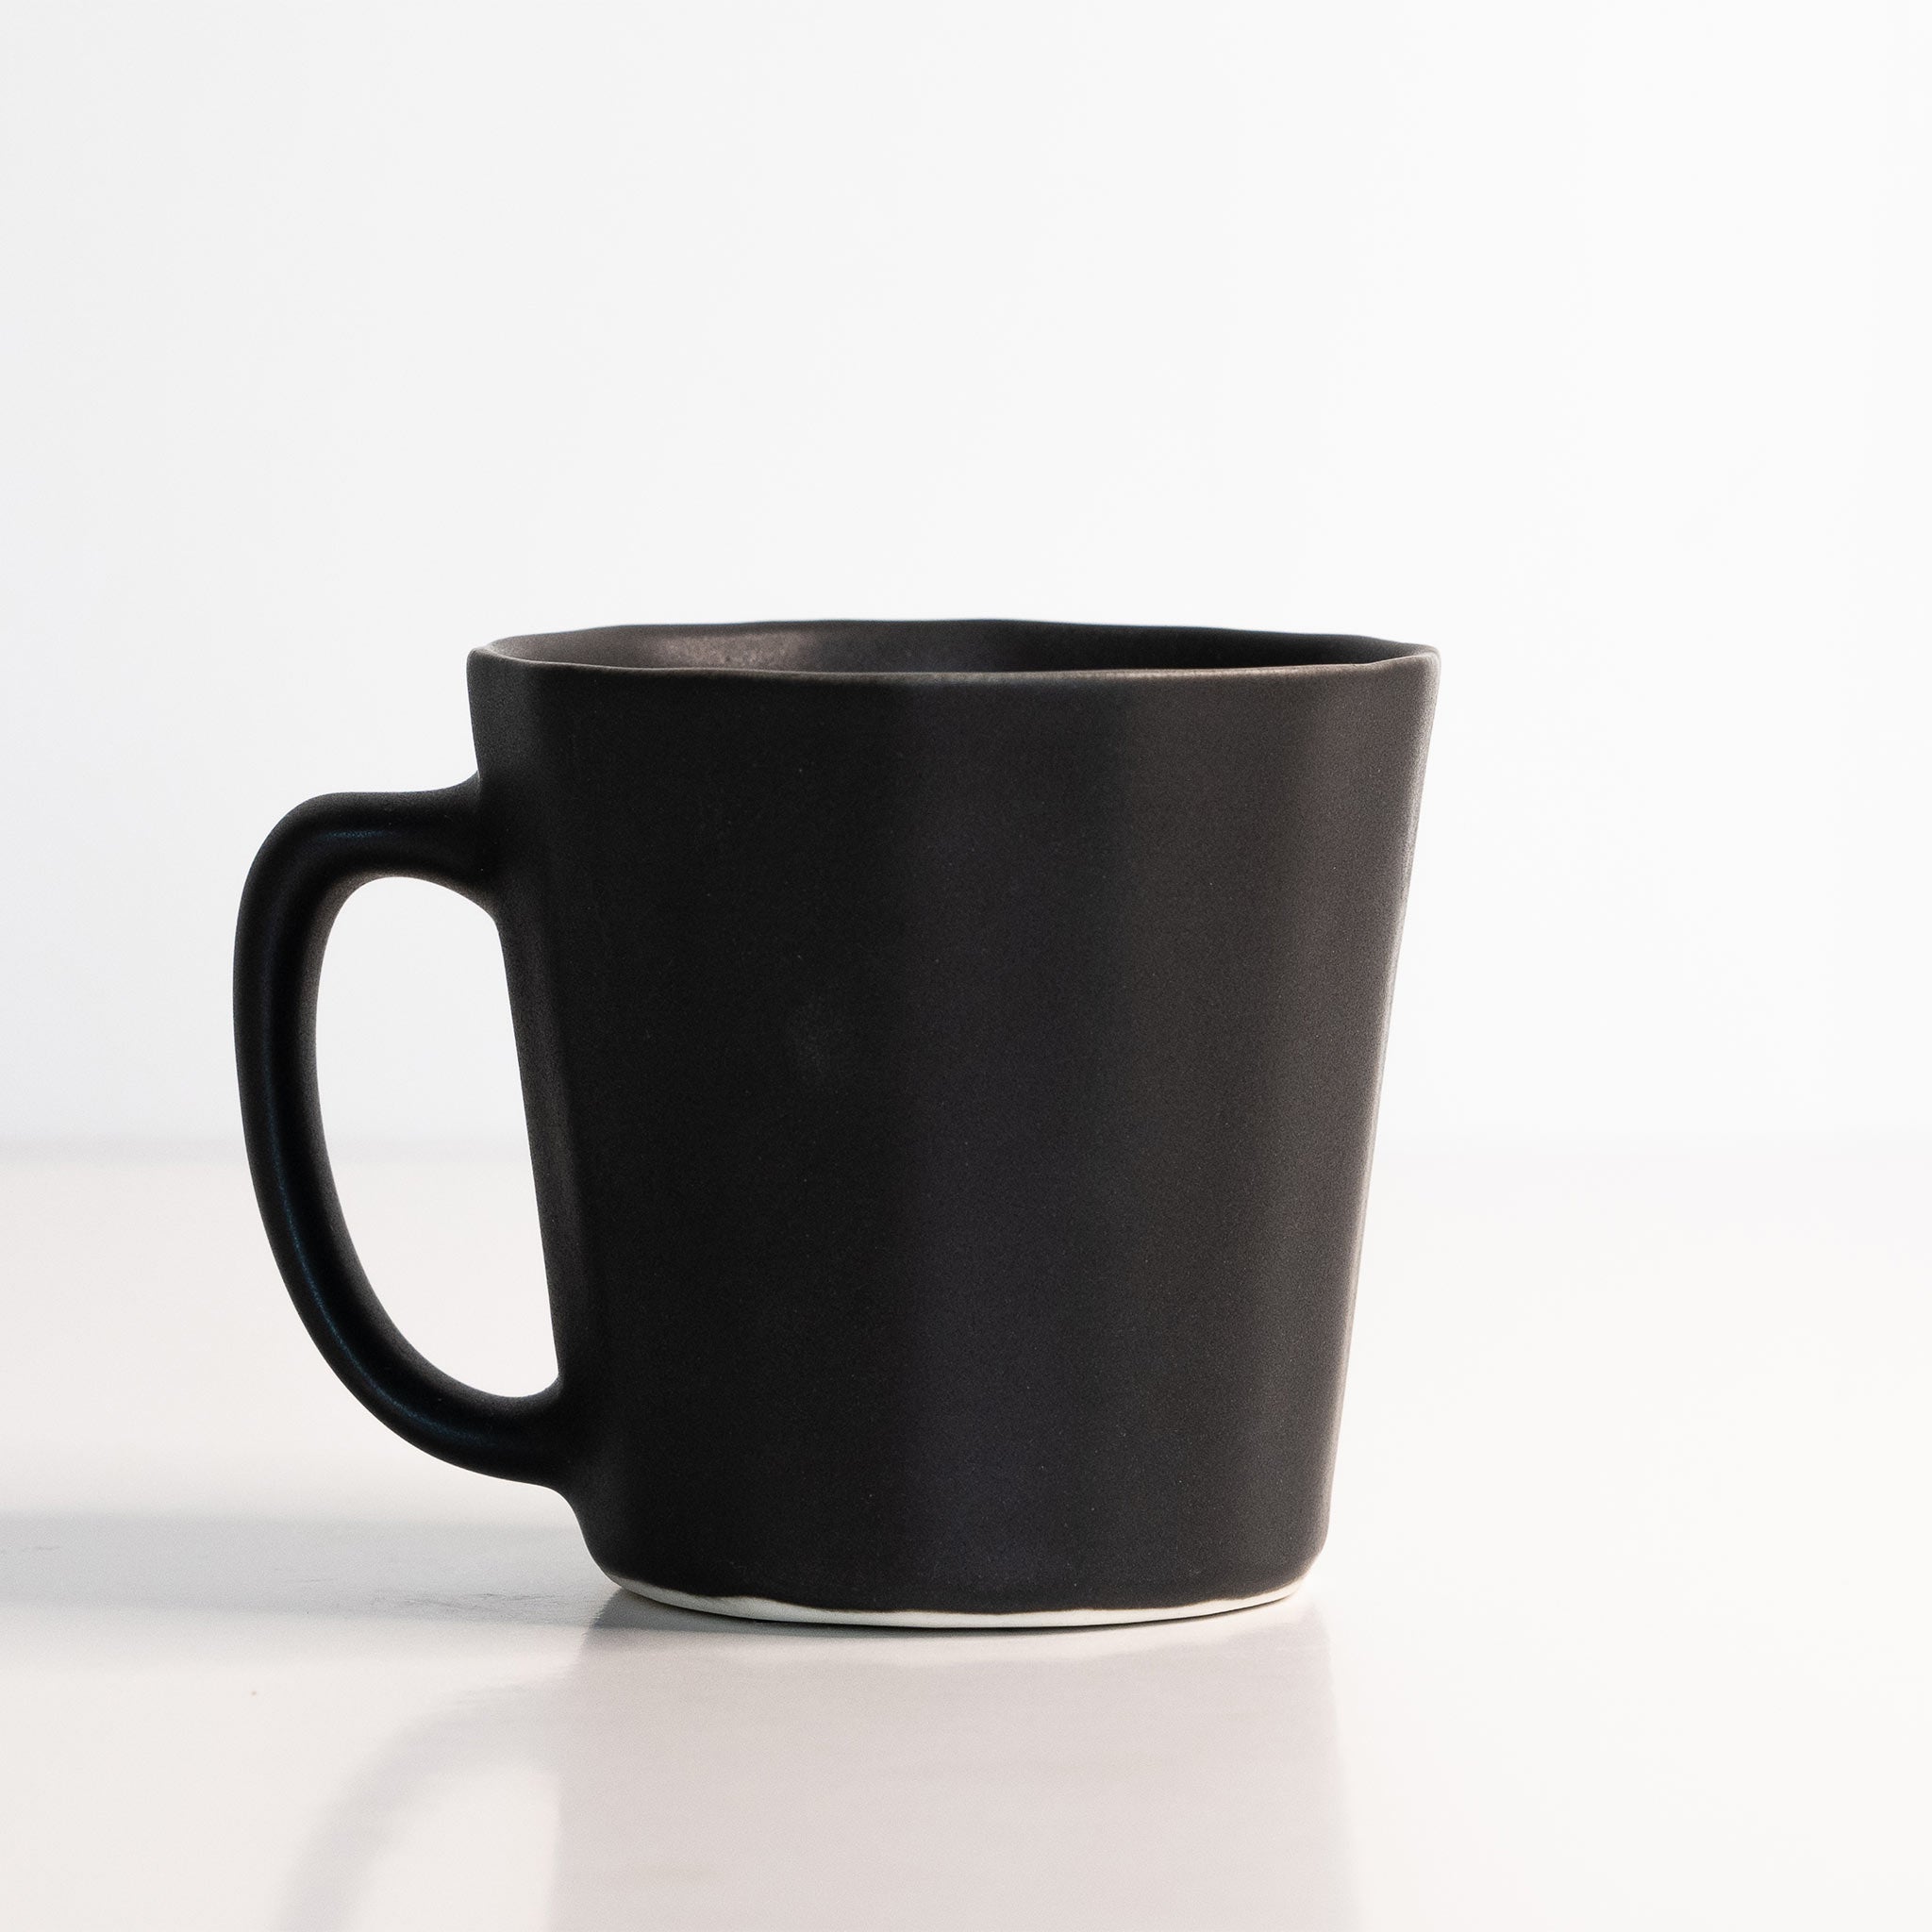 Monday Mug - Handmade Porcelain Coffee Cup - The Bright Angle